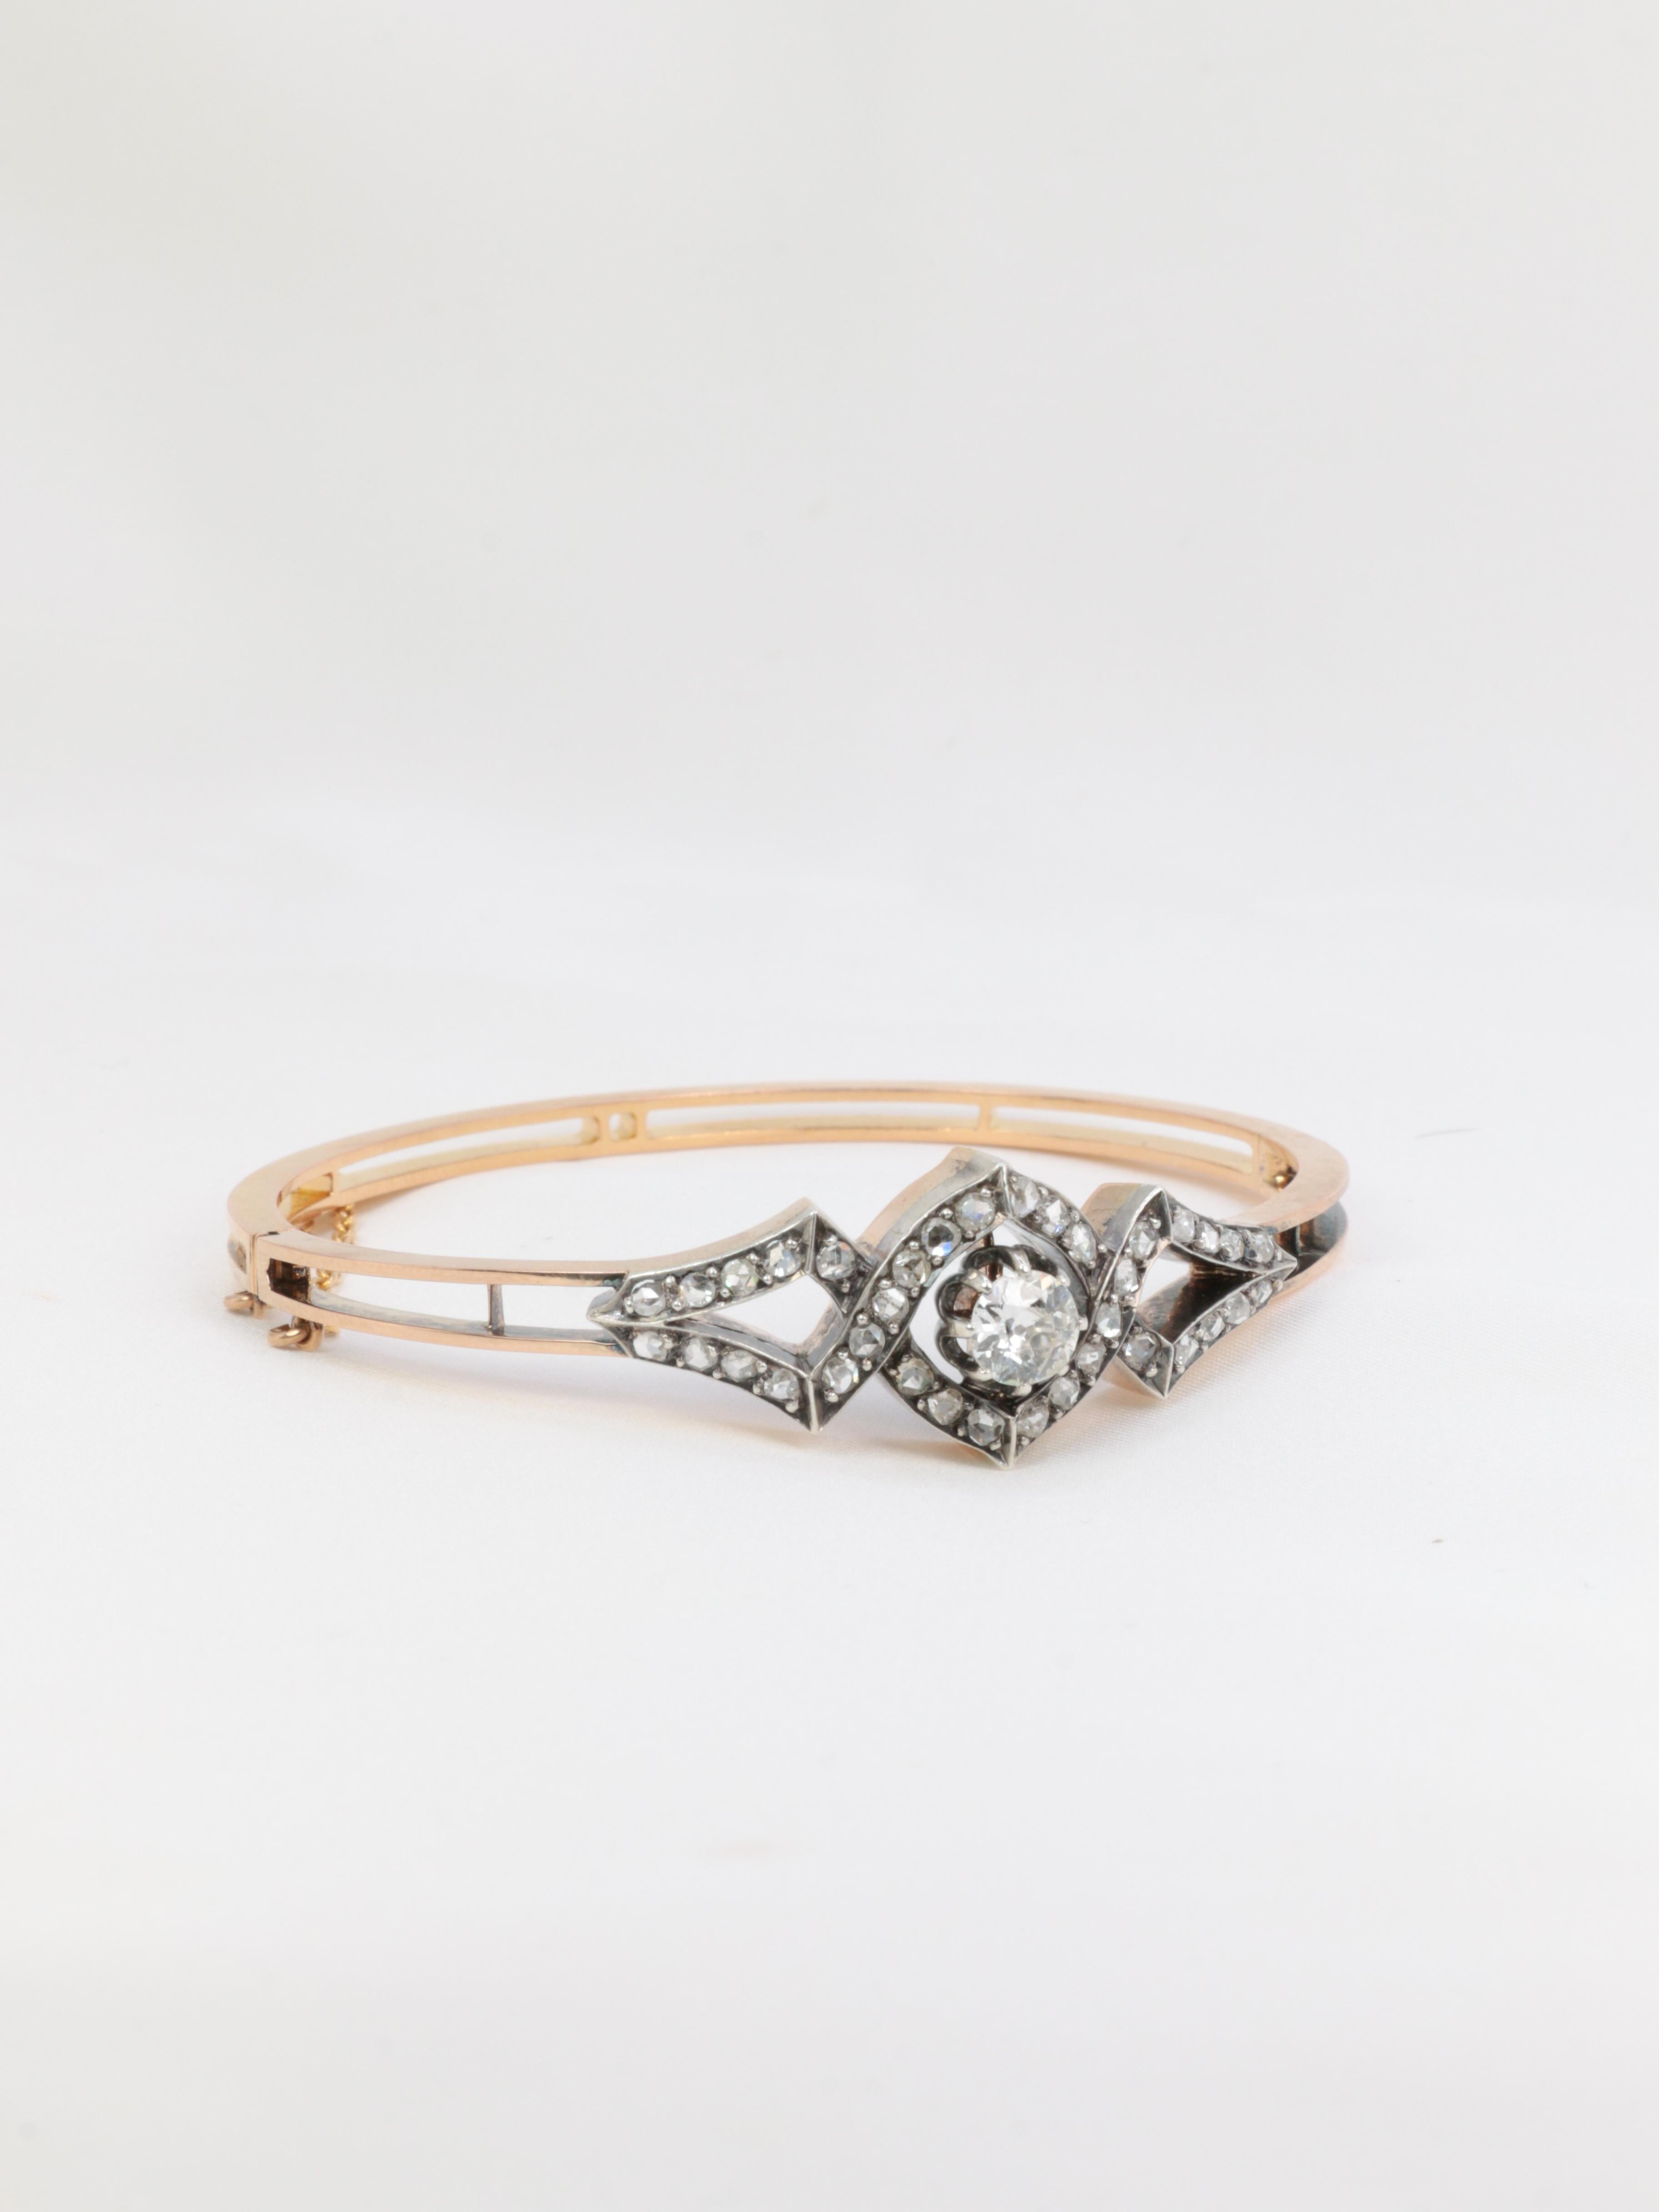 Rose Gold Antique Bangle Bracelet Set with Old Mine Cut Diamonds, Late 19th C. For Sale 3